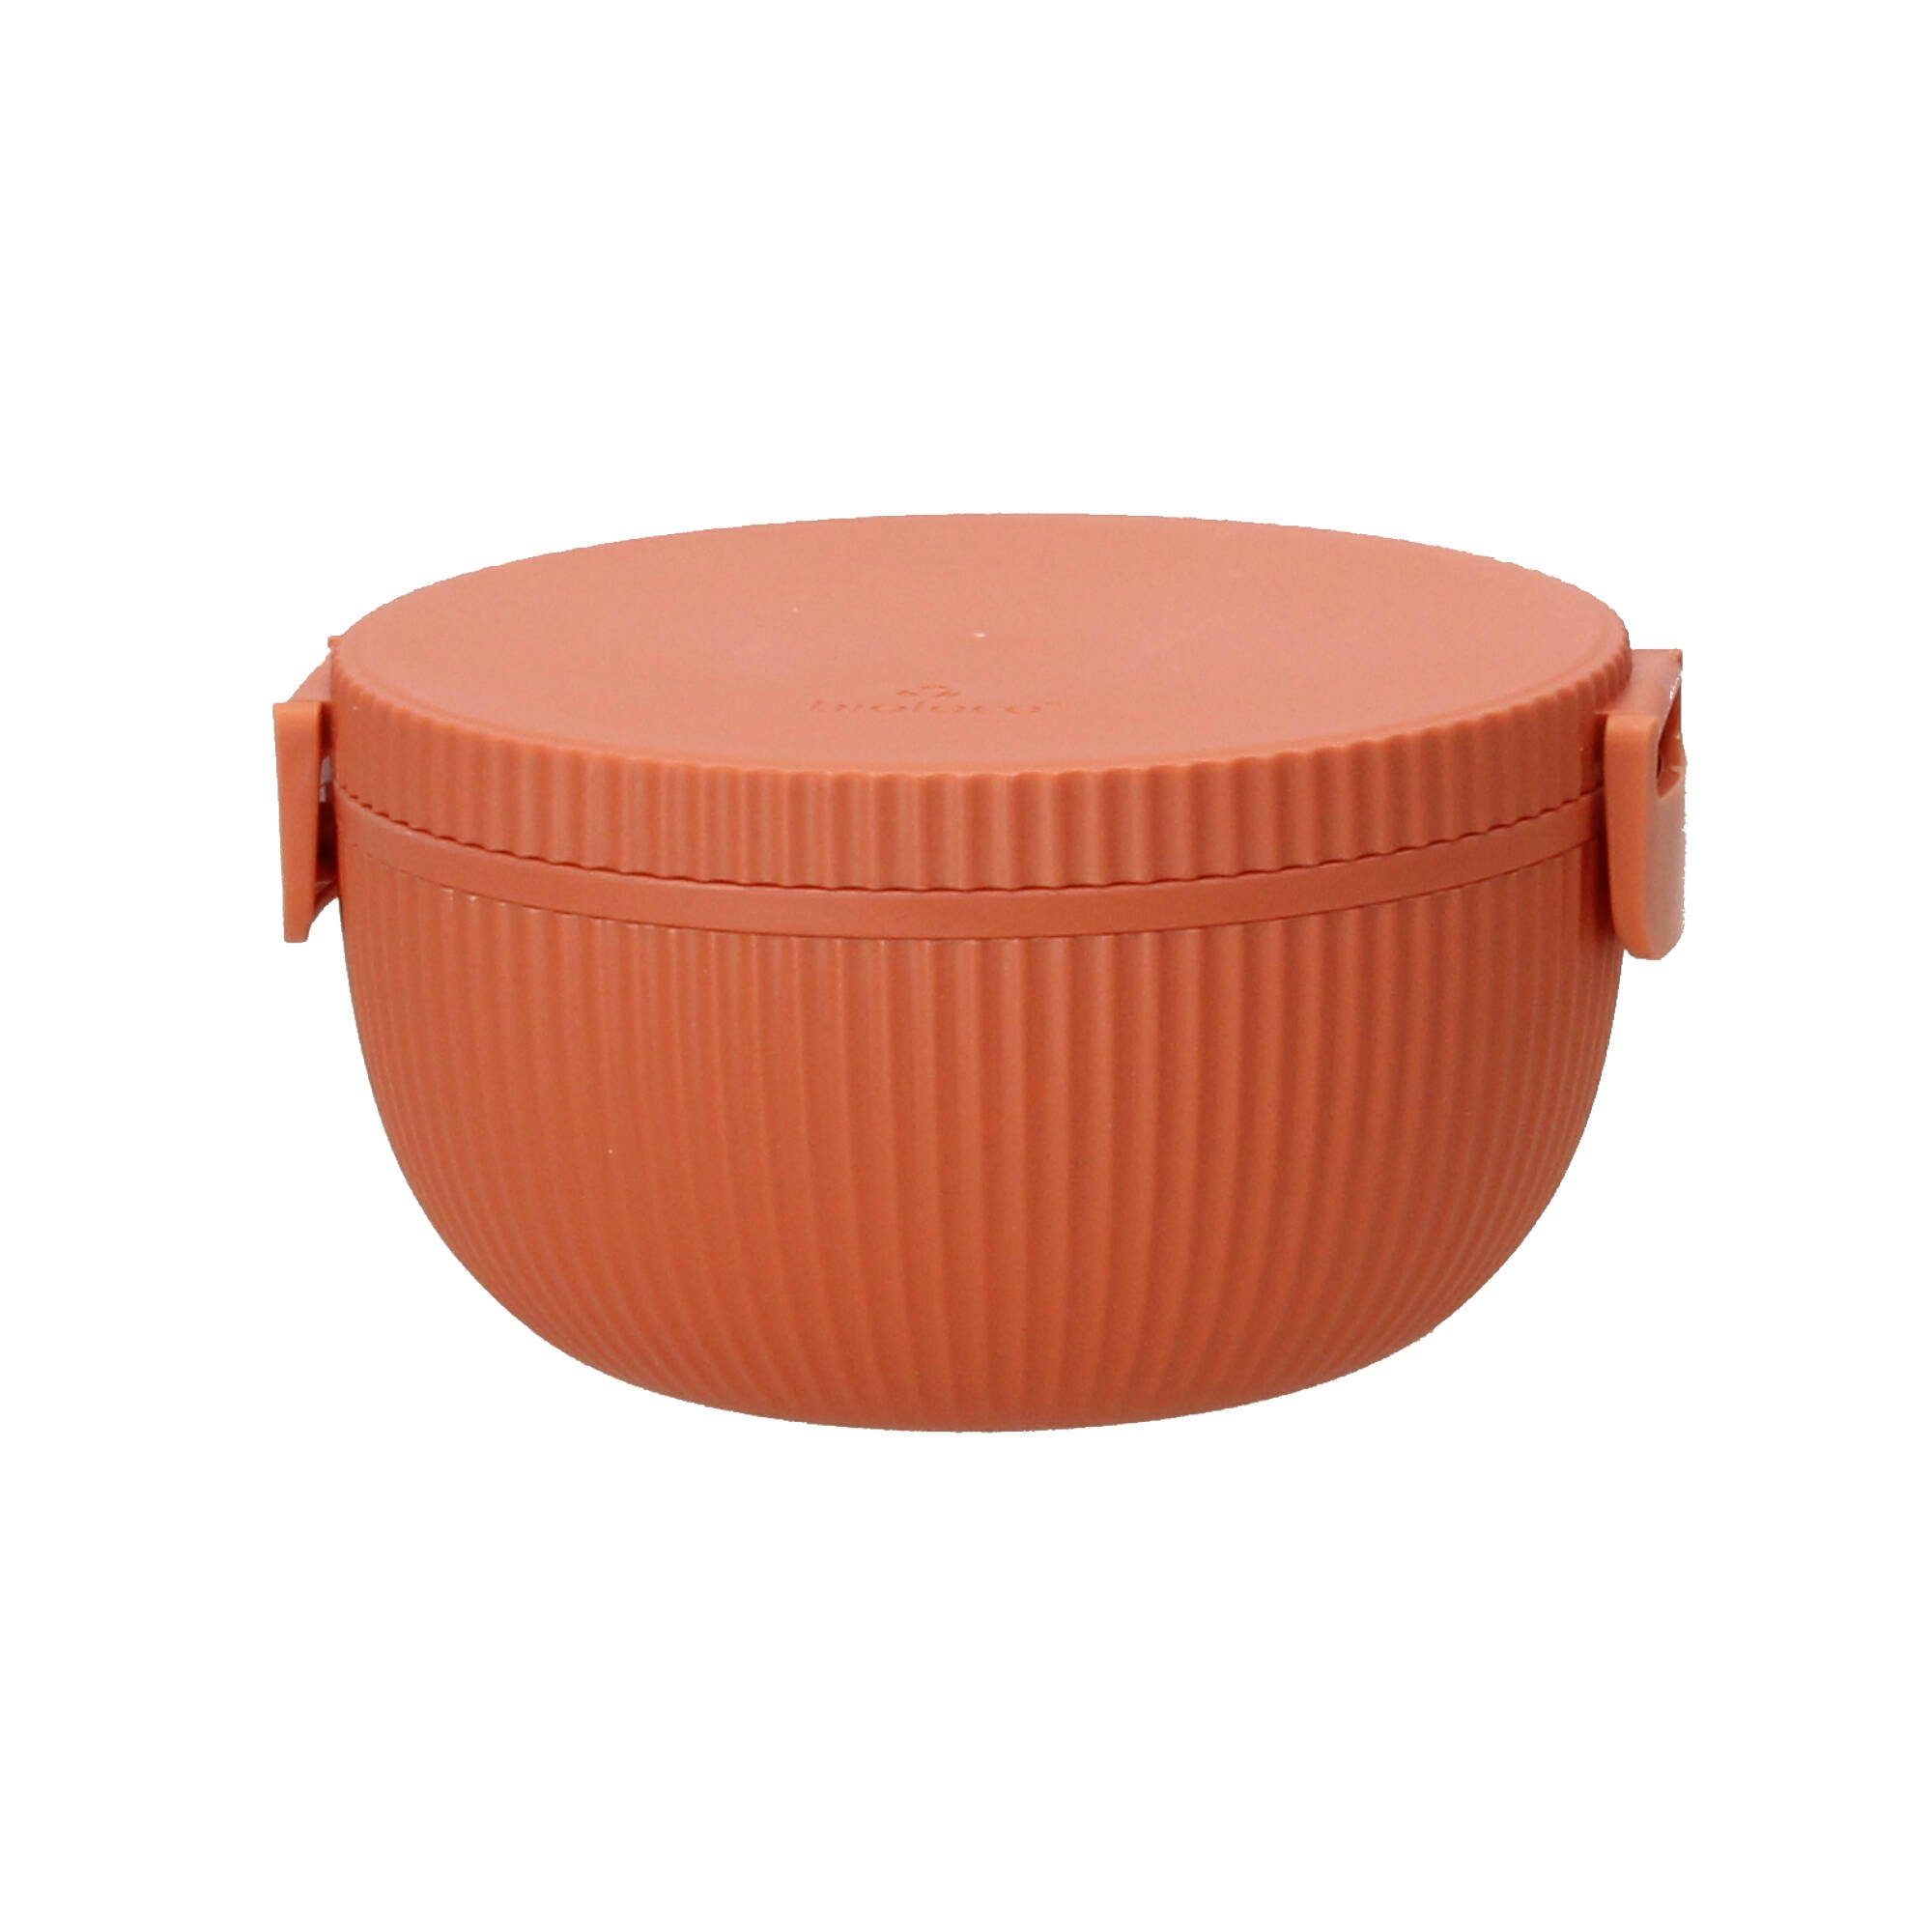 mic bioloco (Kunststoff (1-tlg) Lunchbox PLA GmbH Pflanzenzucker), deluxe terracotta, chic bowl aus plant